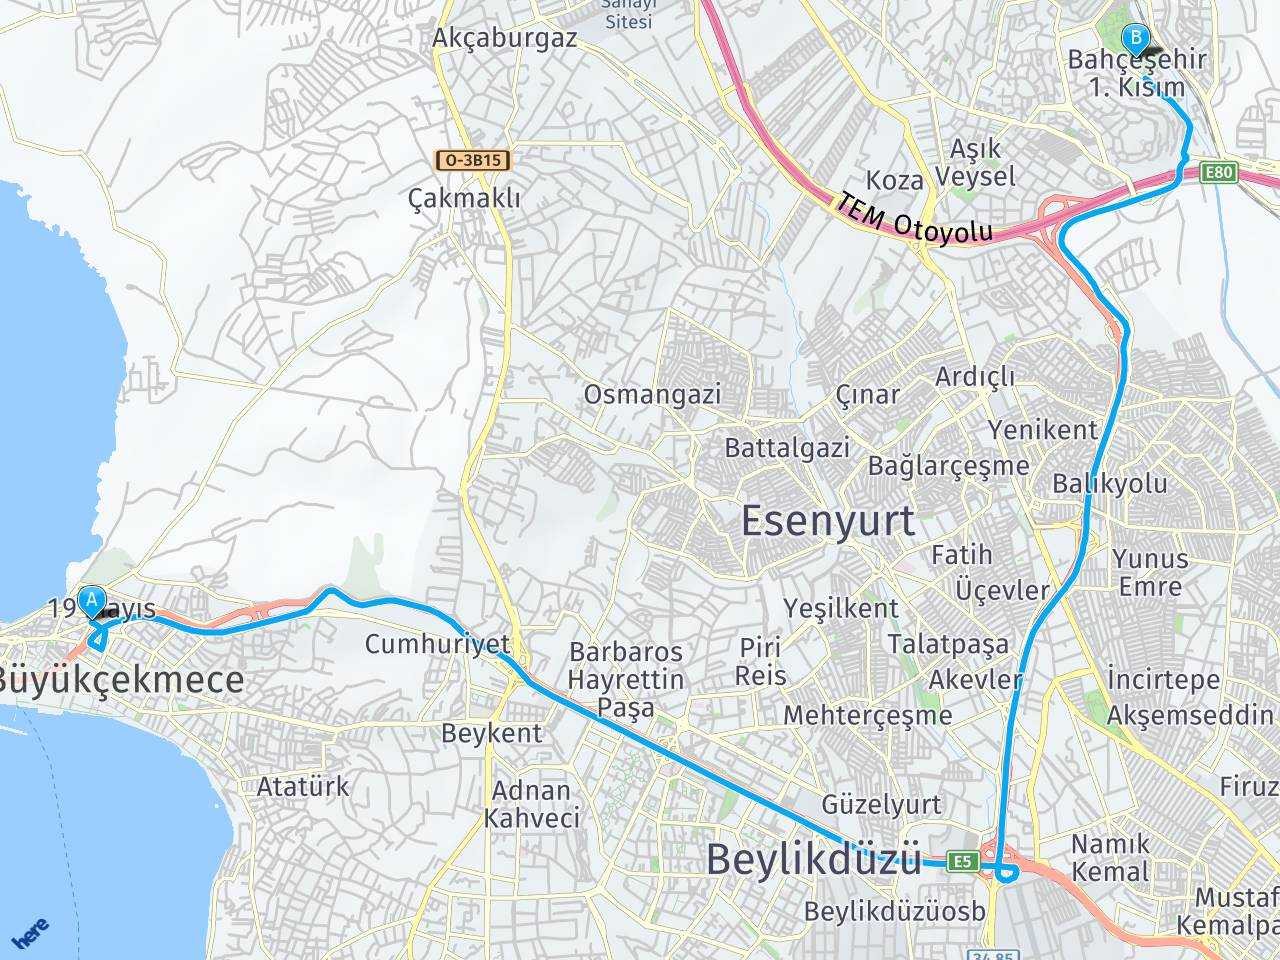 buyukcekmece mall of istanbul arasi mesafe buyukcekmece mall of istanbul yol haritasi buyukcekmece mall of istanbul kac saat kac km